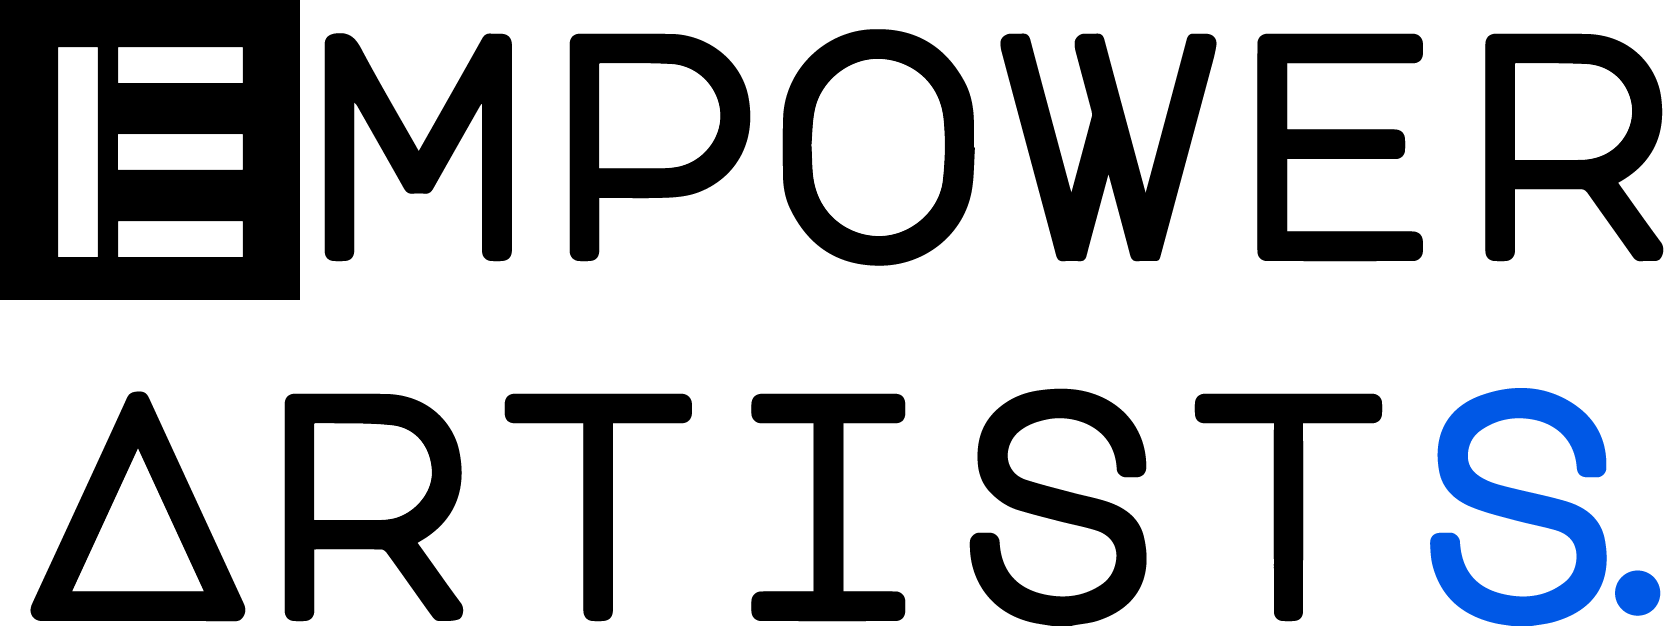 Empower Artists logo albastru.png